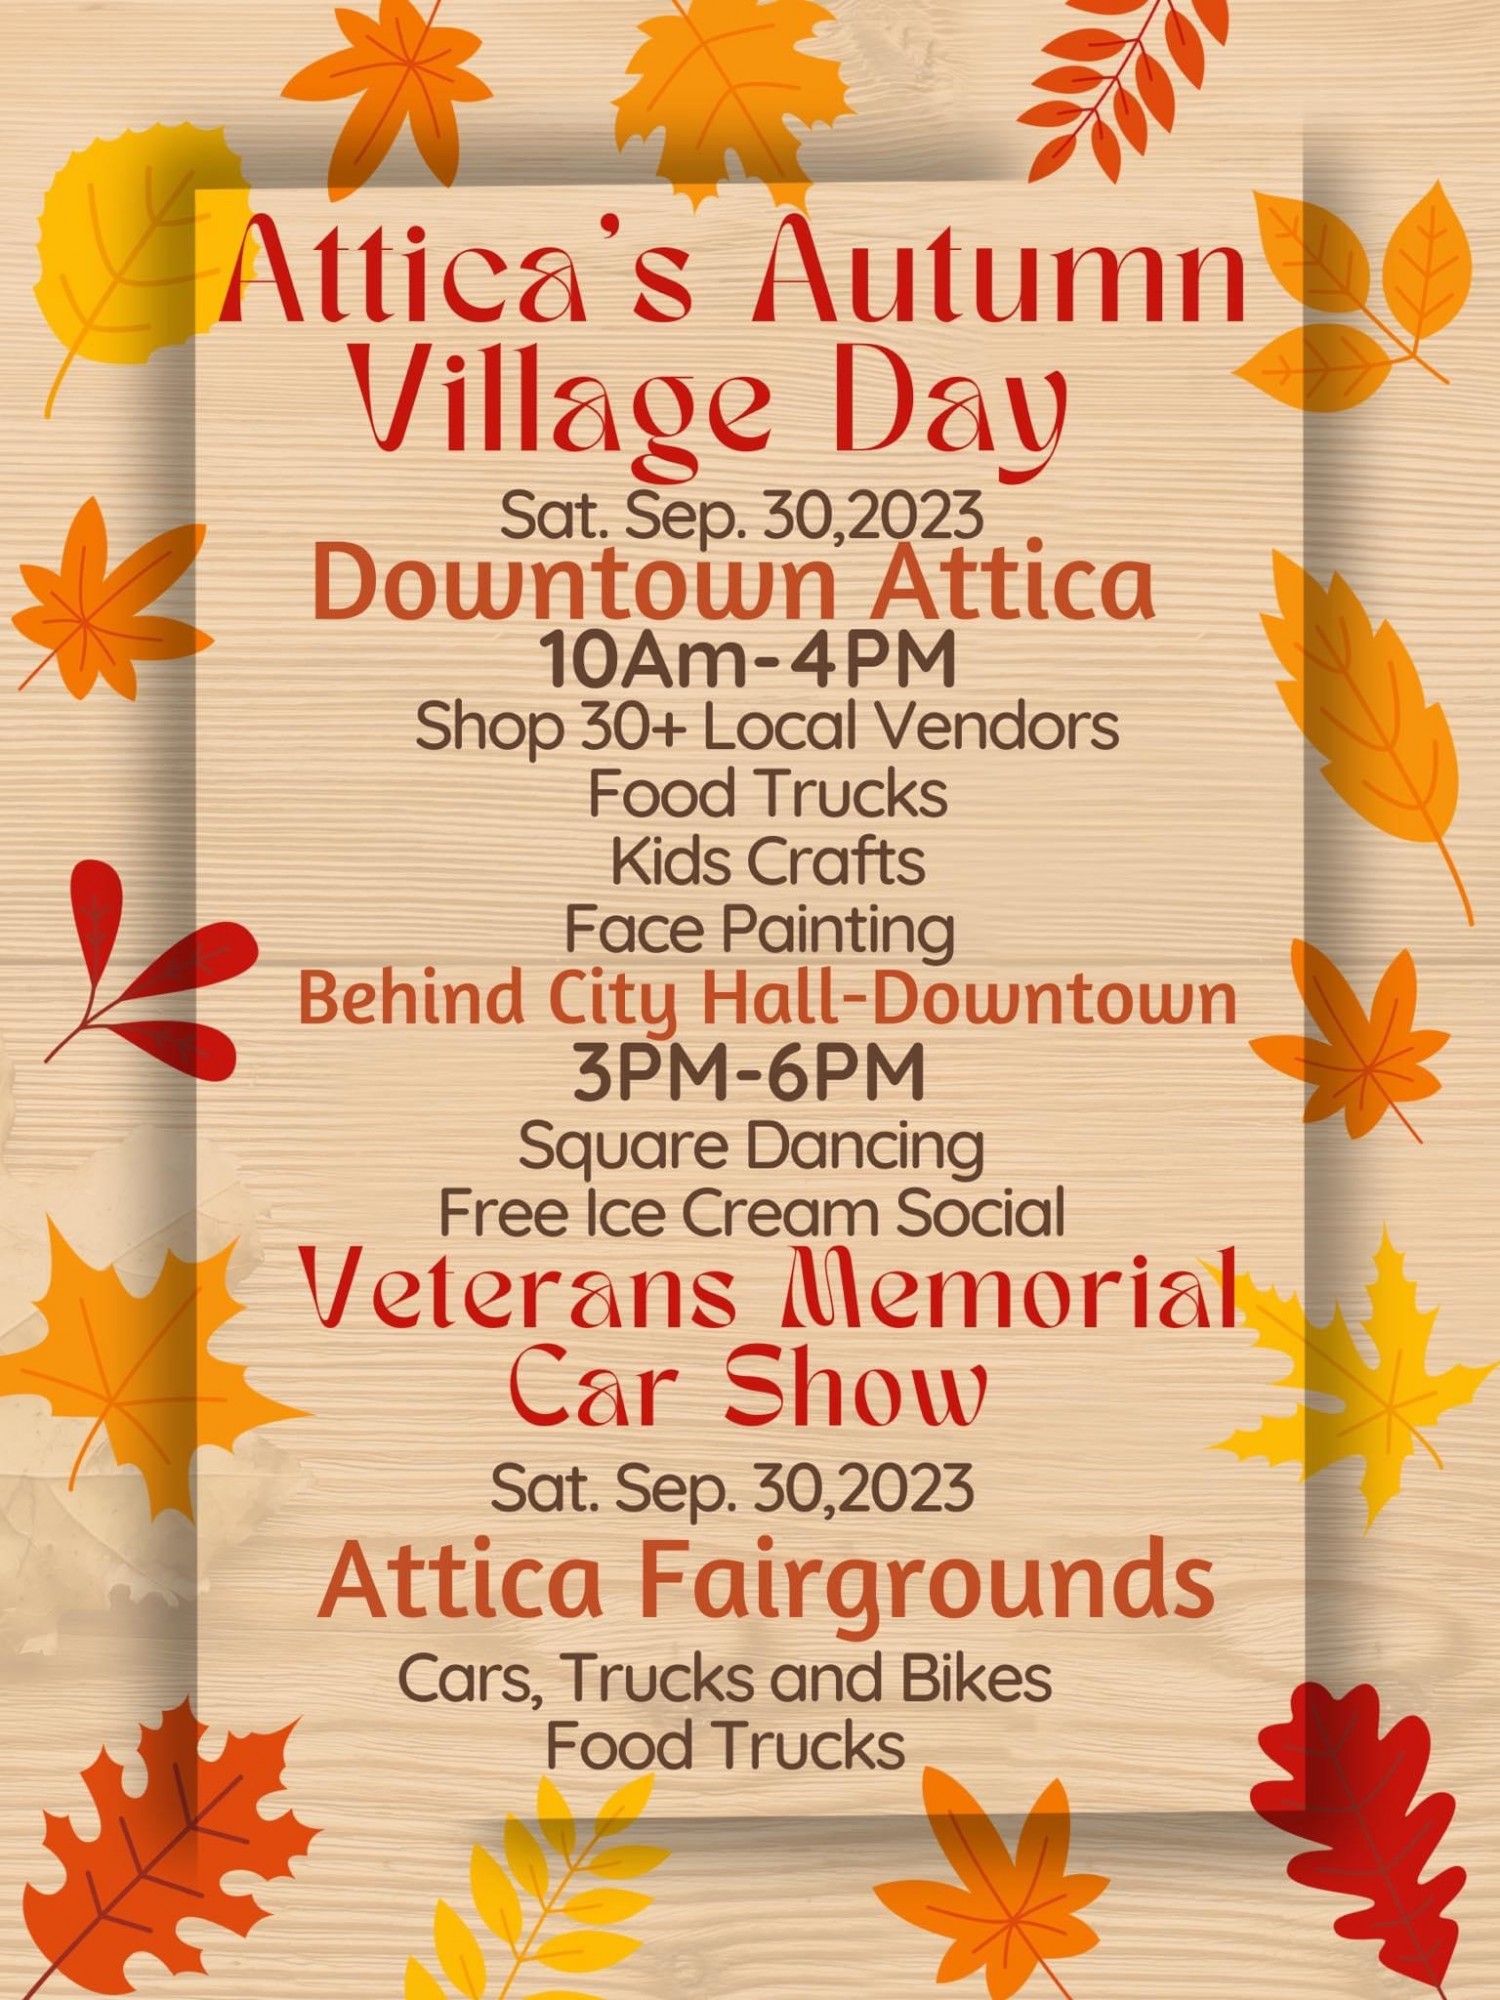 Attica's Autumn Village Day